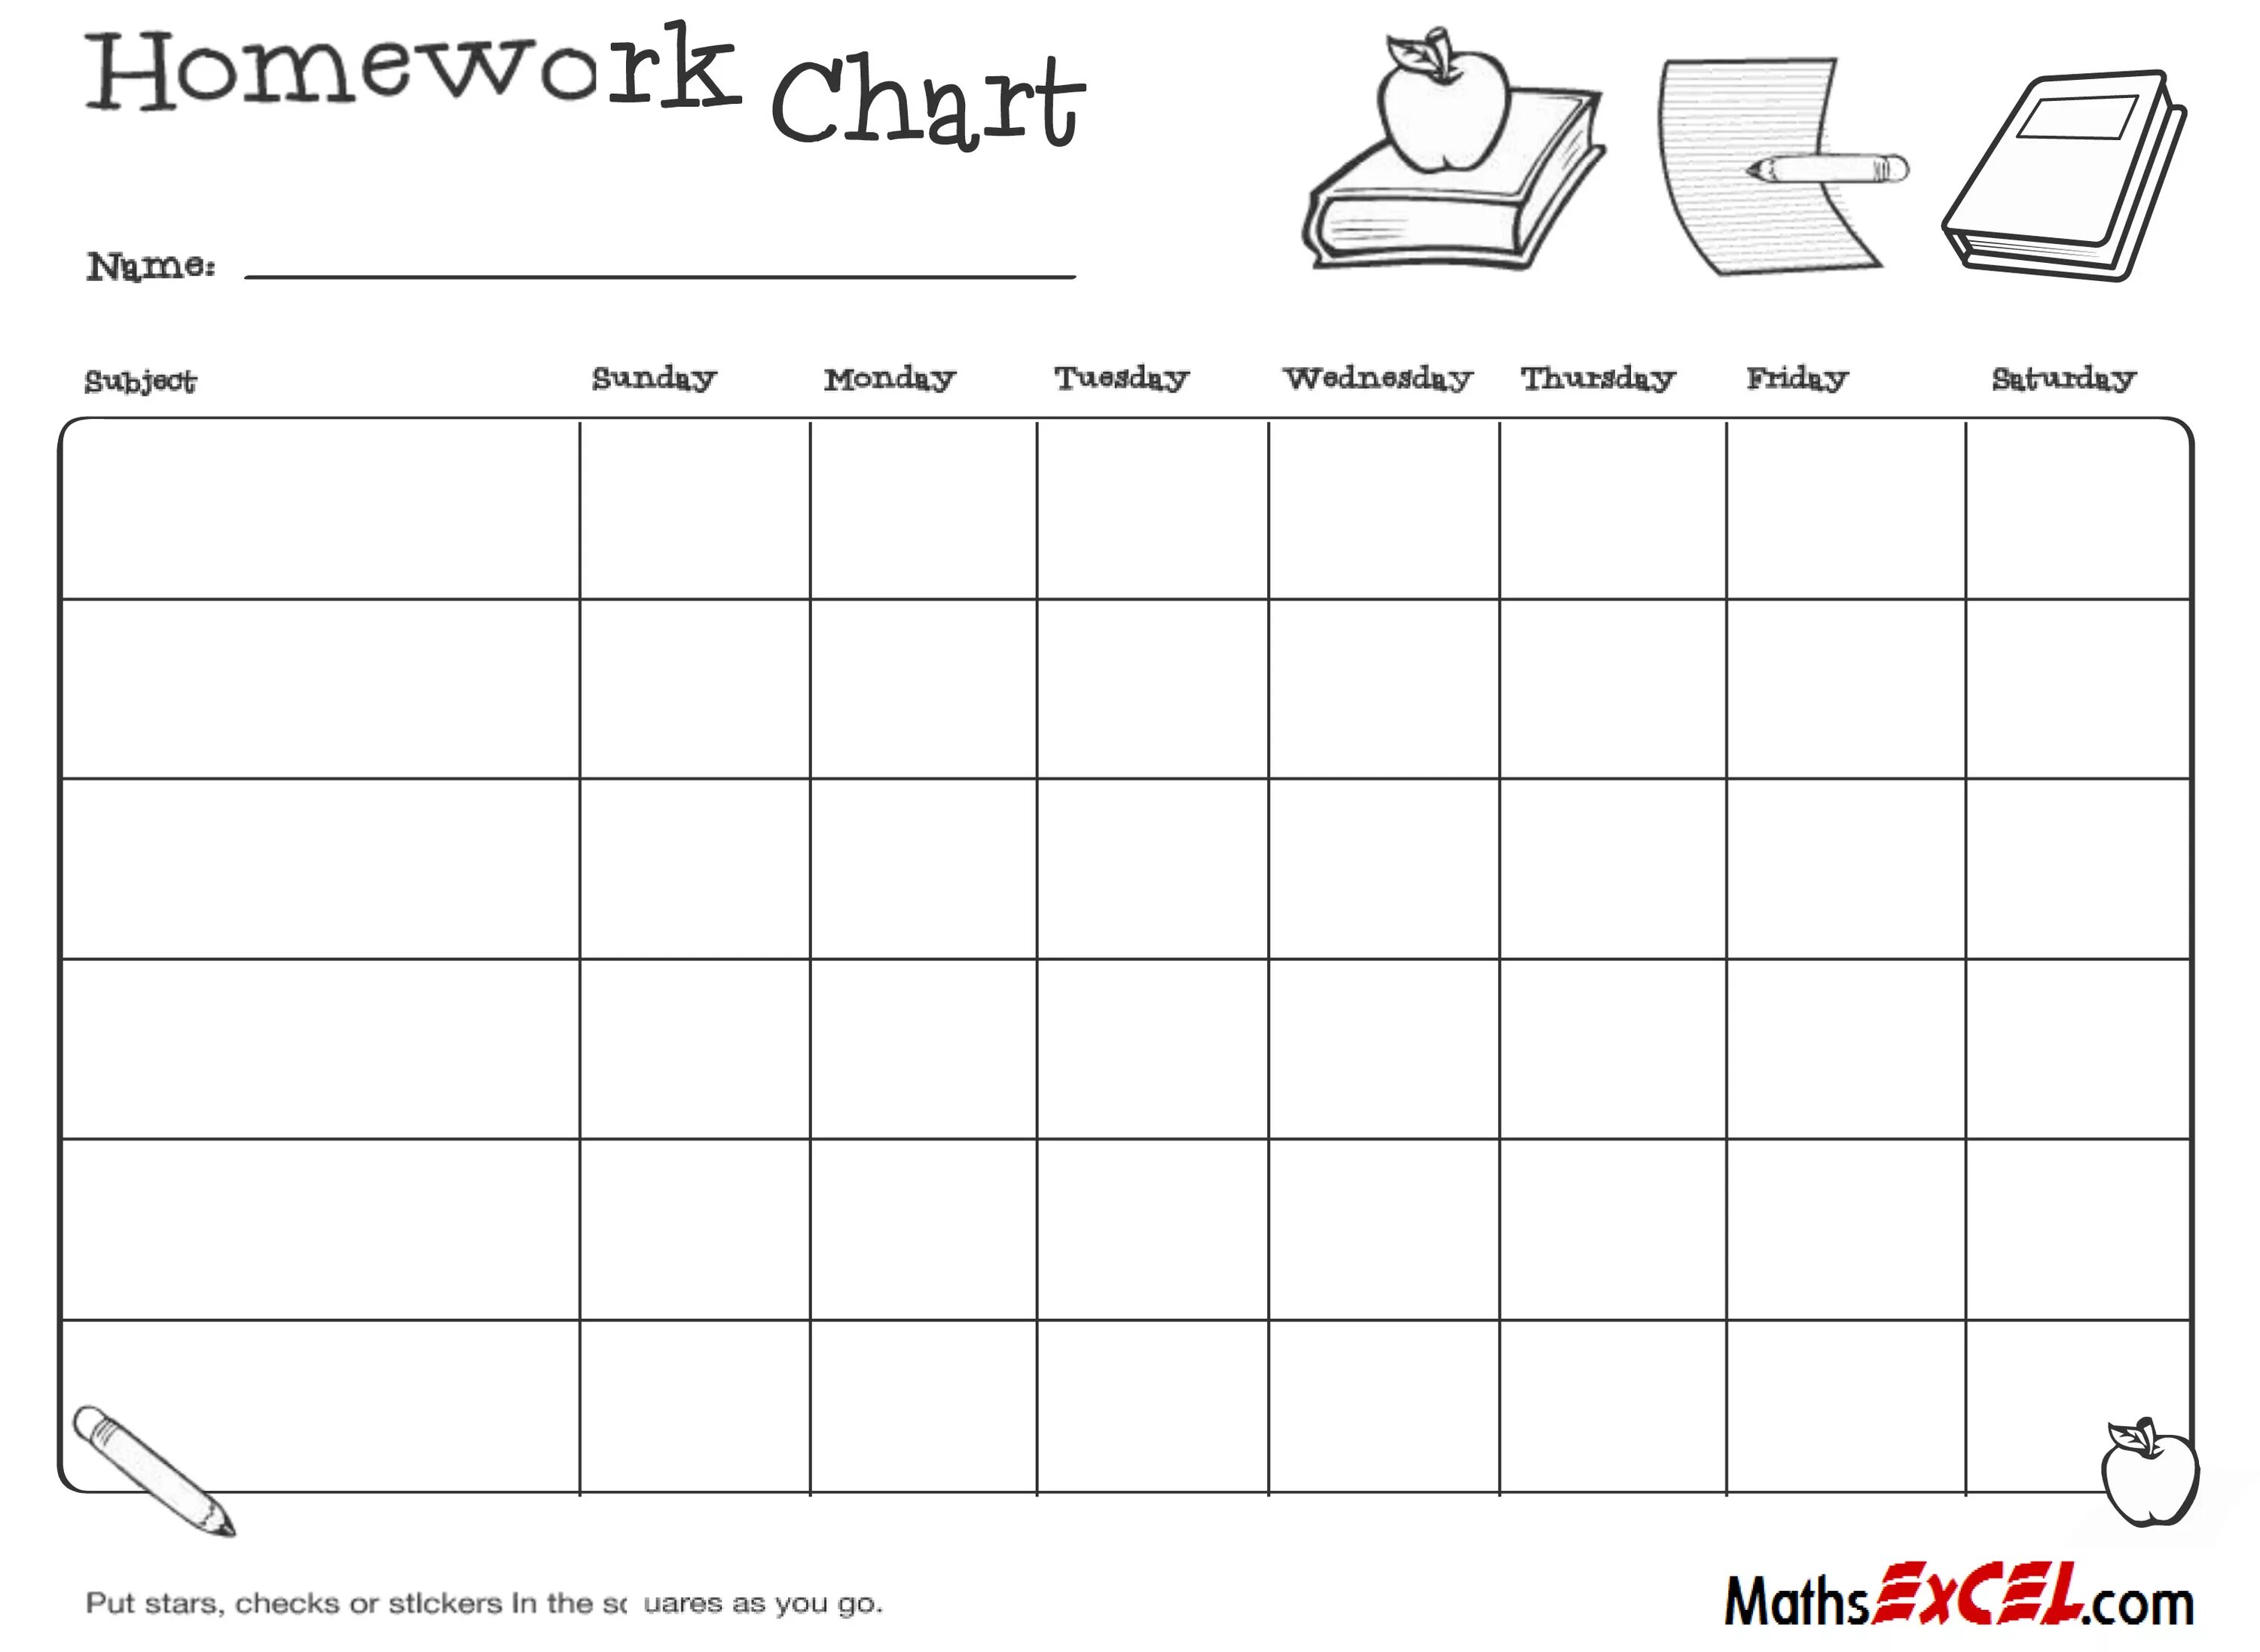 Homework Chart. Homework reward Chart. Monthly homework Chart. Планер на неделю шаблон.